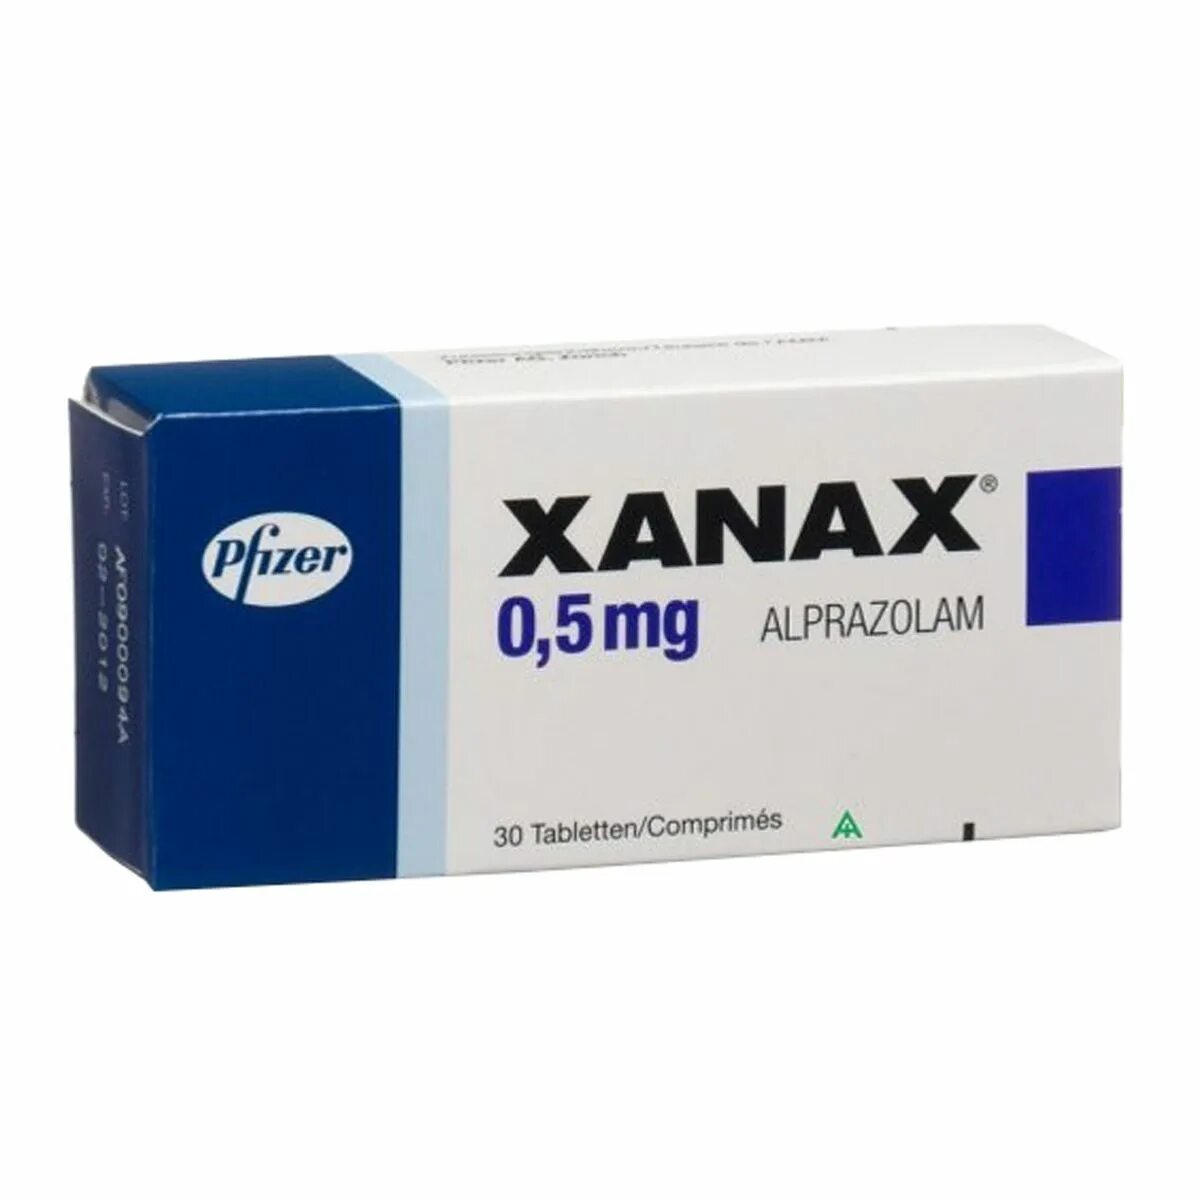 Xanax что это. Ксанакс лекарство. Ксанакс 4,5 мг. Золомакс это ксанакс. Ксанакс 5 мг.